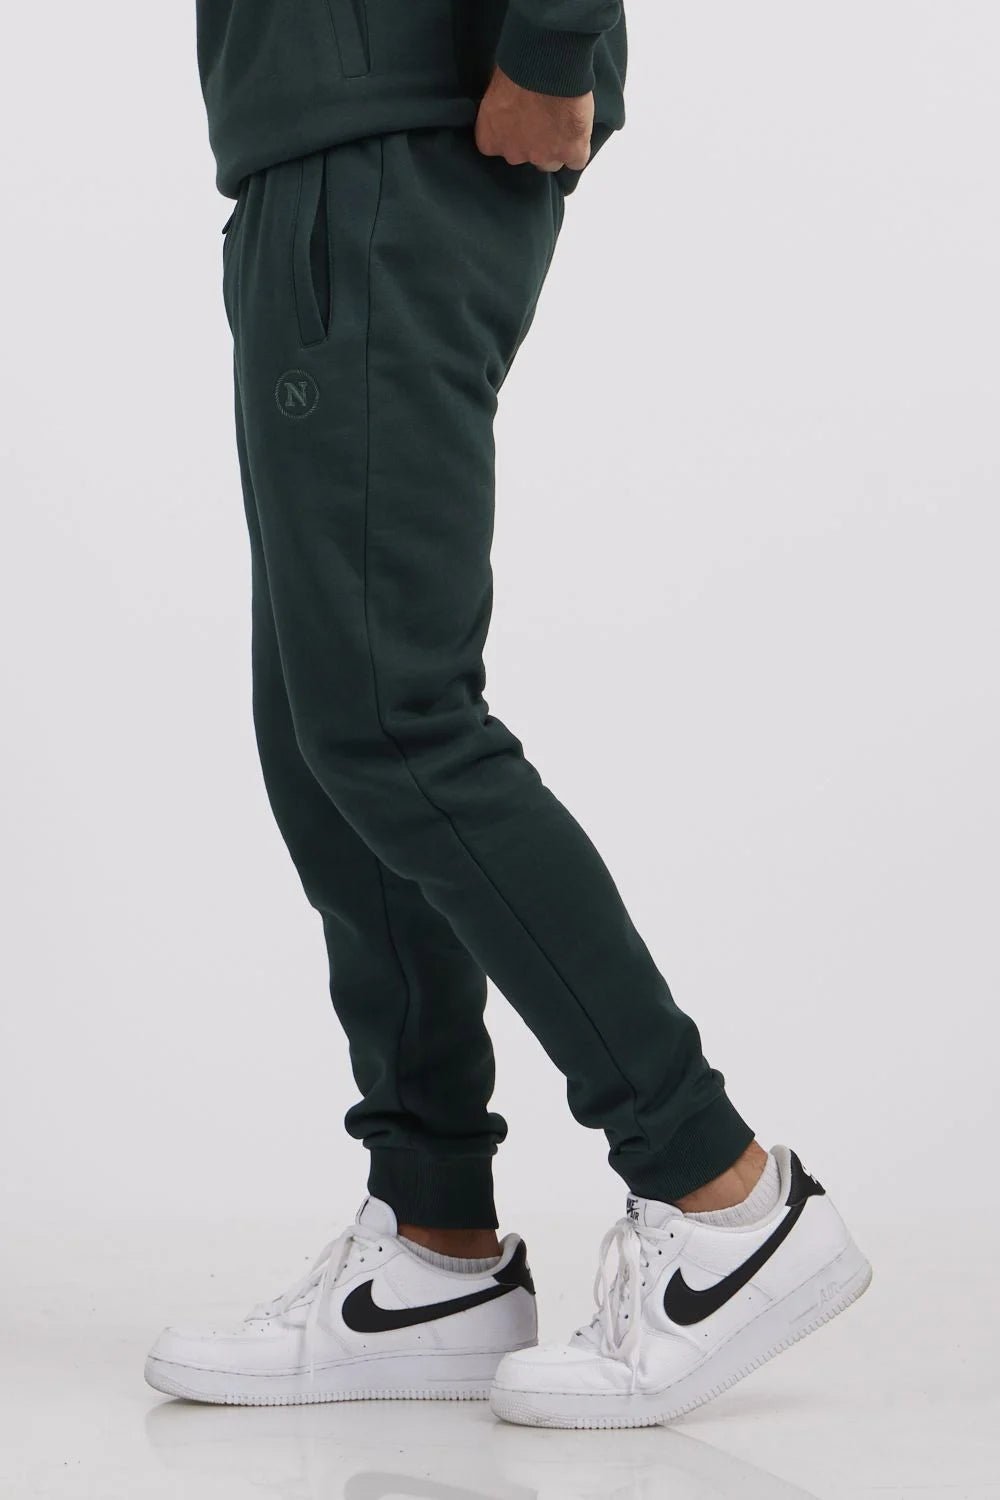 NAUTICA - מכנסי טרנינג אלונזו בצבע ירוק - MASHBIR//365